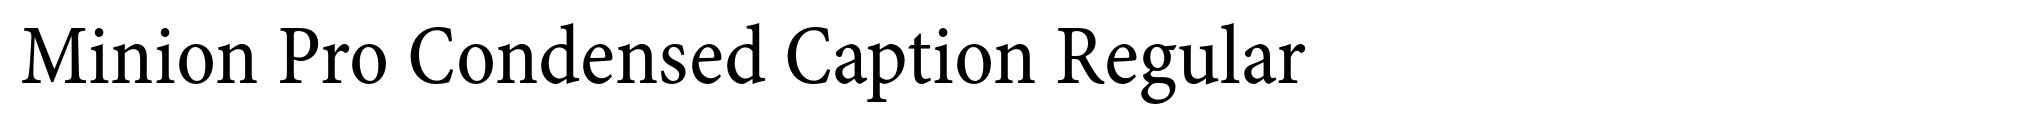 Minion Pro Condensed Caption Regular image